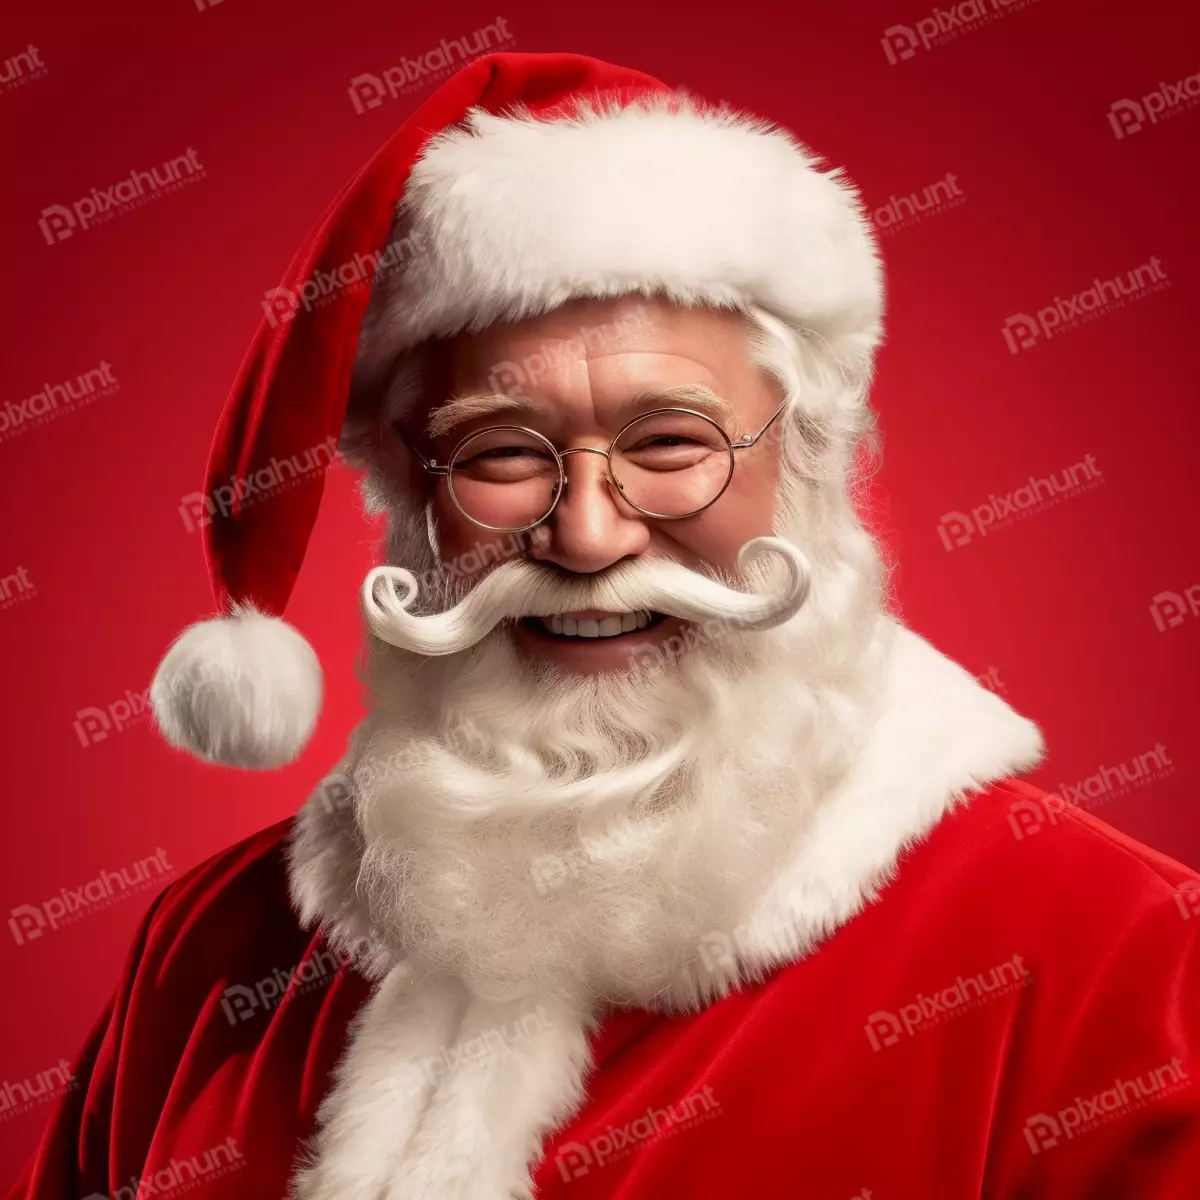 Free Premium Stock Photos Santa claus smiling isolated photo on red dark background